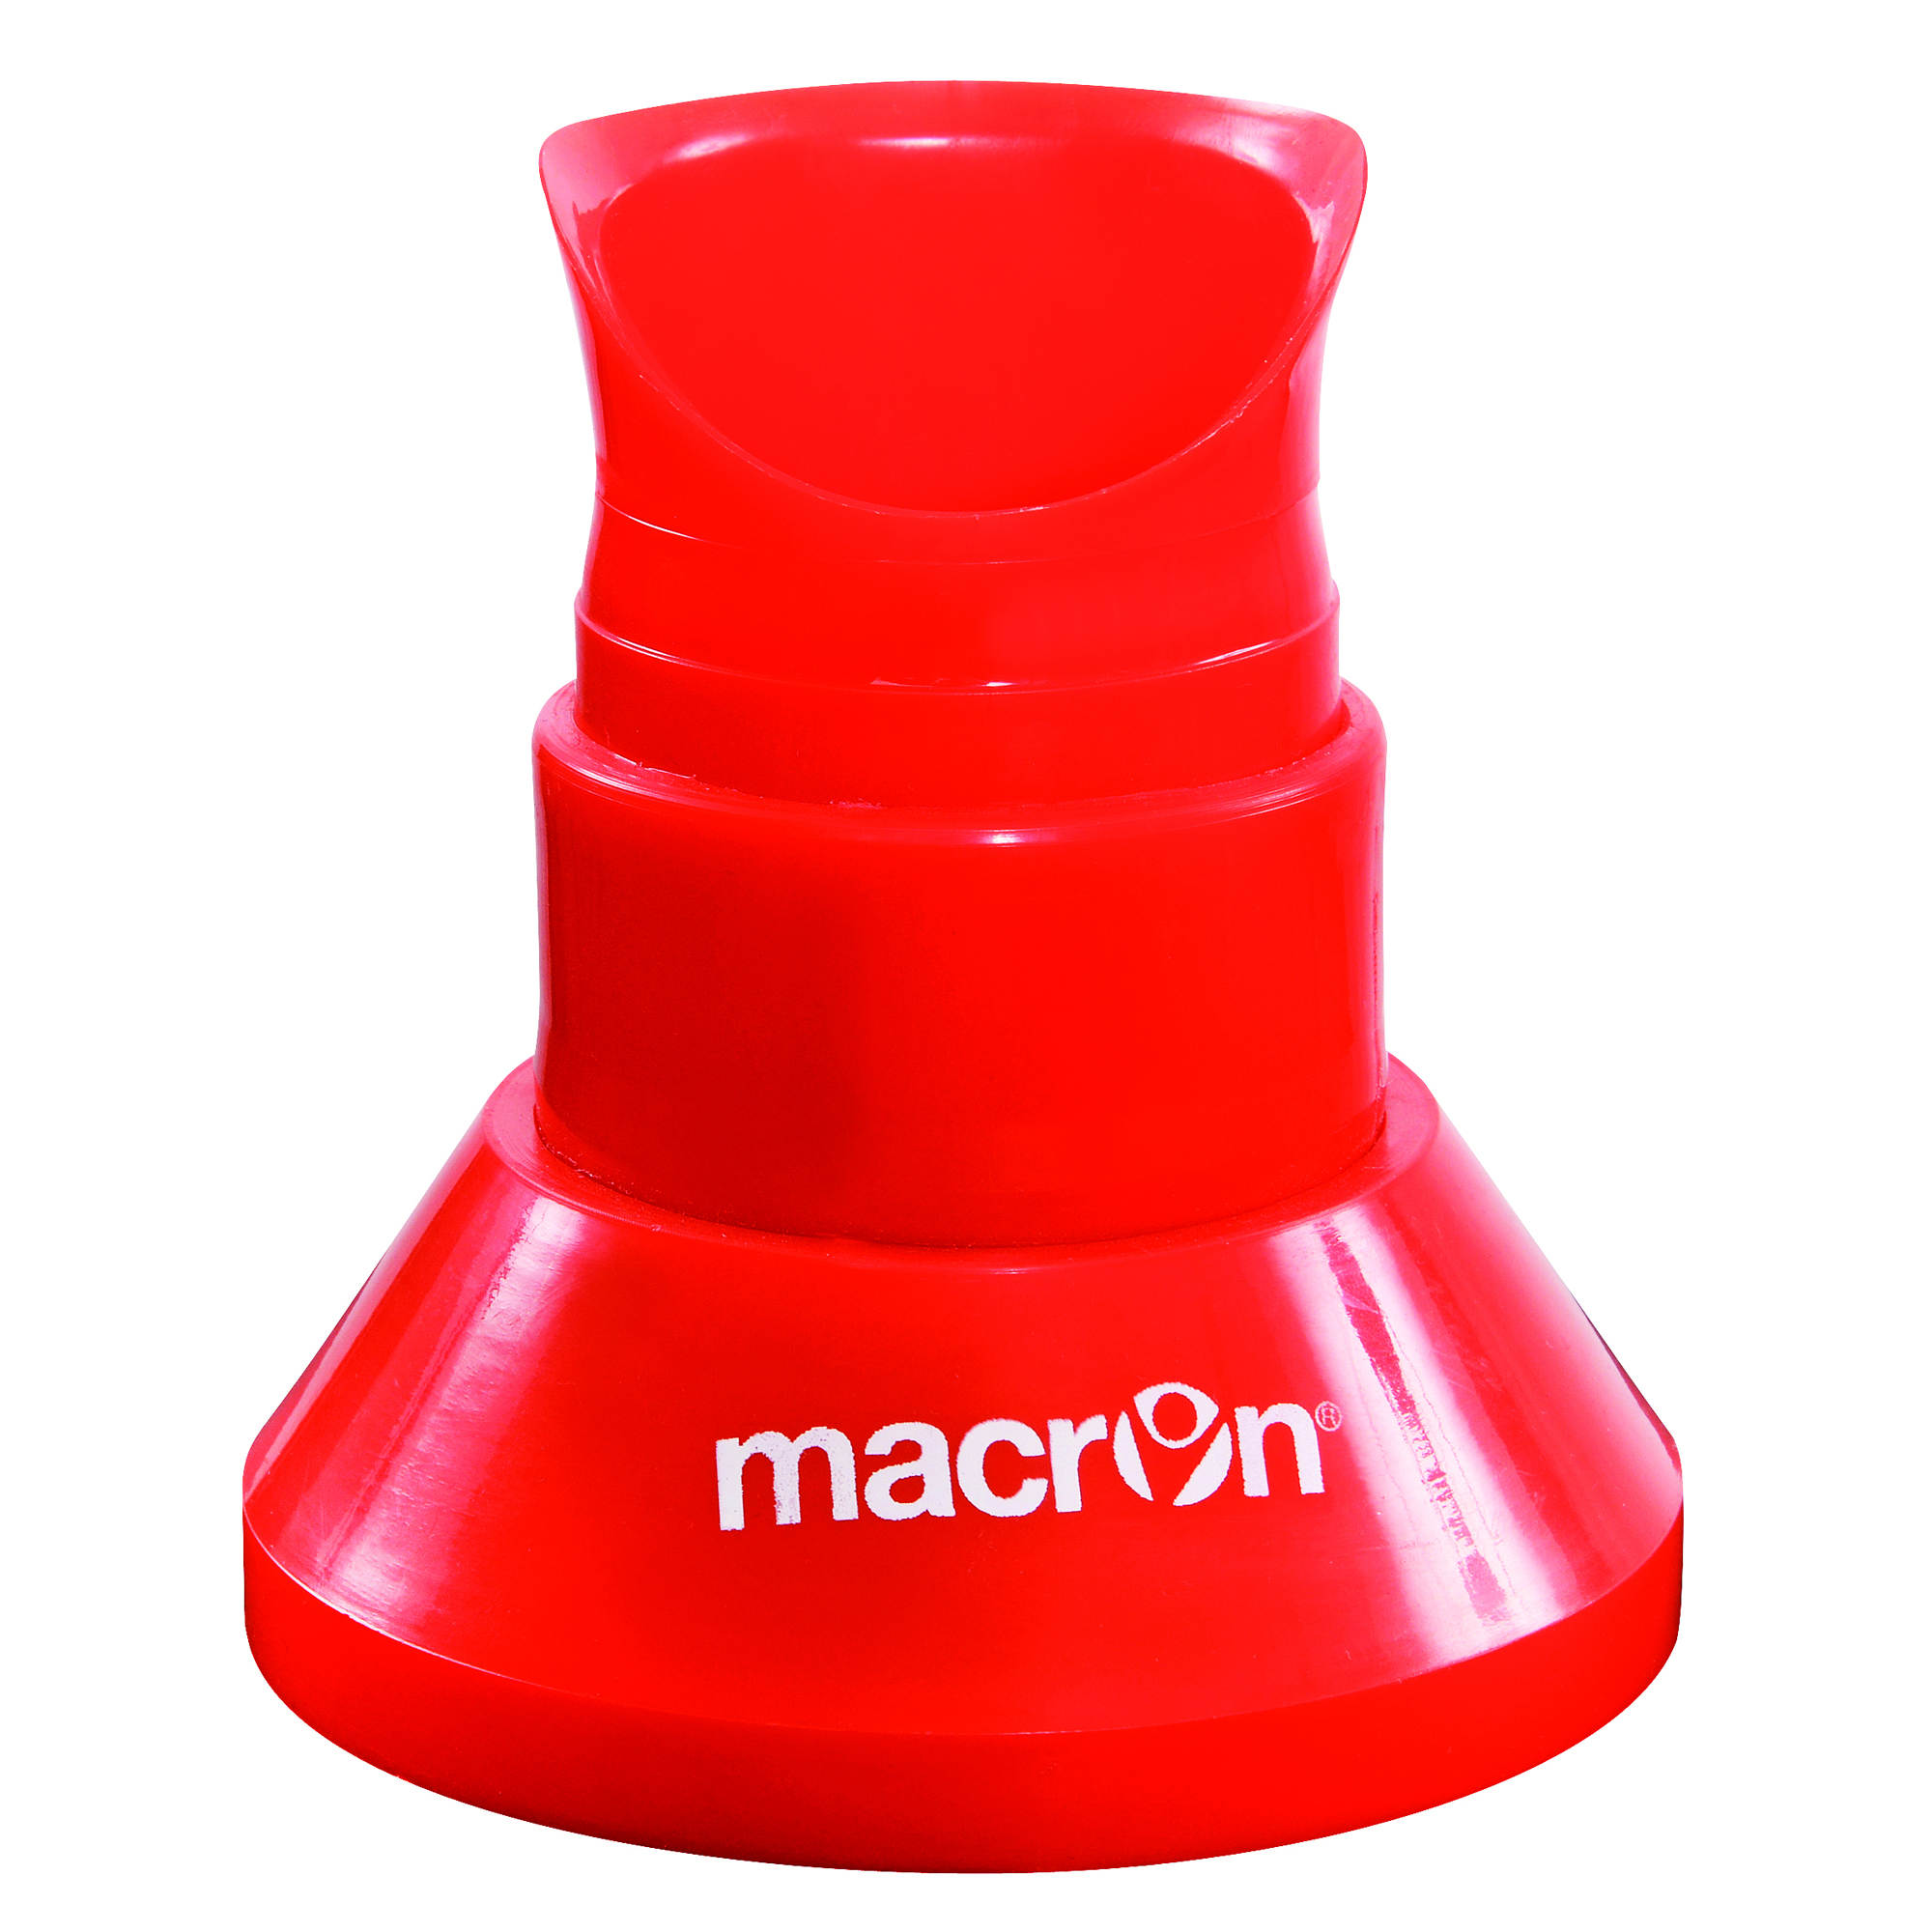 Macron Rugby Kicking Tee Adjustable